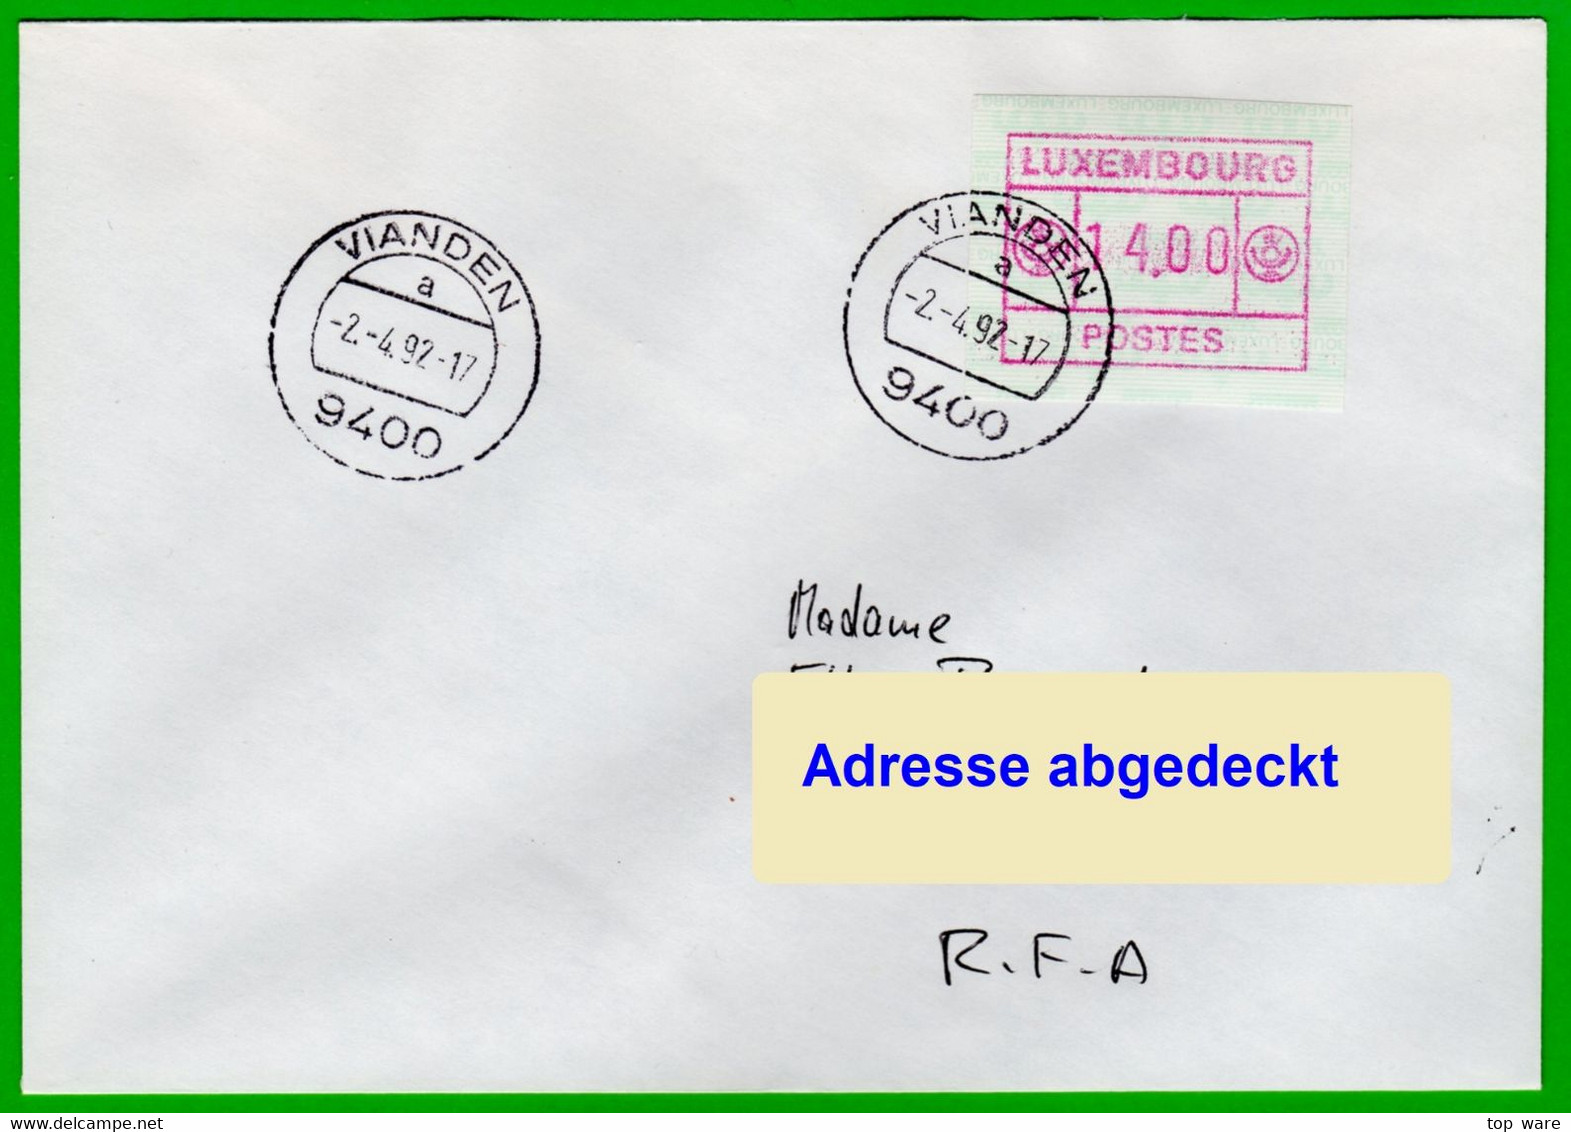 Luxemburg Luxembourg Timbres ATM 2 Kleines Postes * ERROR Kopfstehendes Papier 14 Fr. Brief Nach D. Frama Distributeurs - Postage Labels